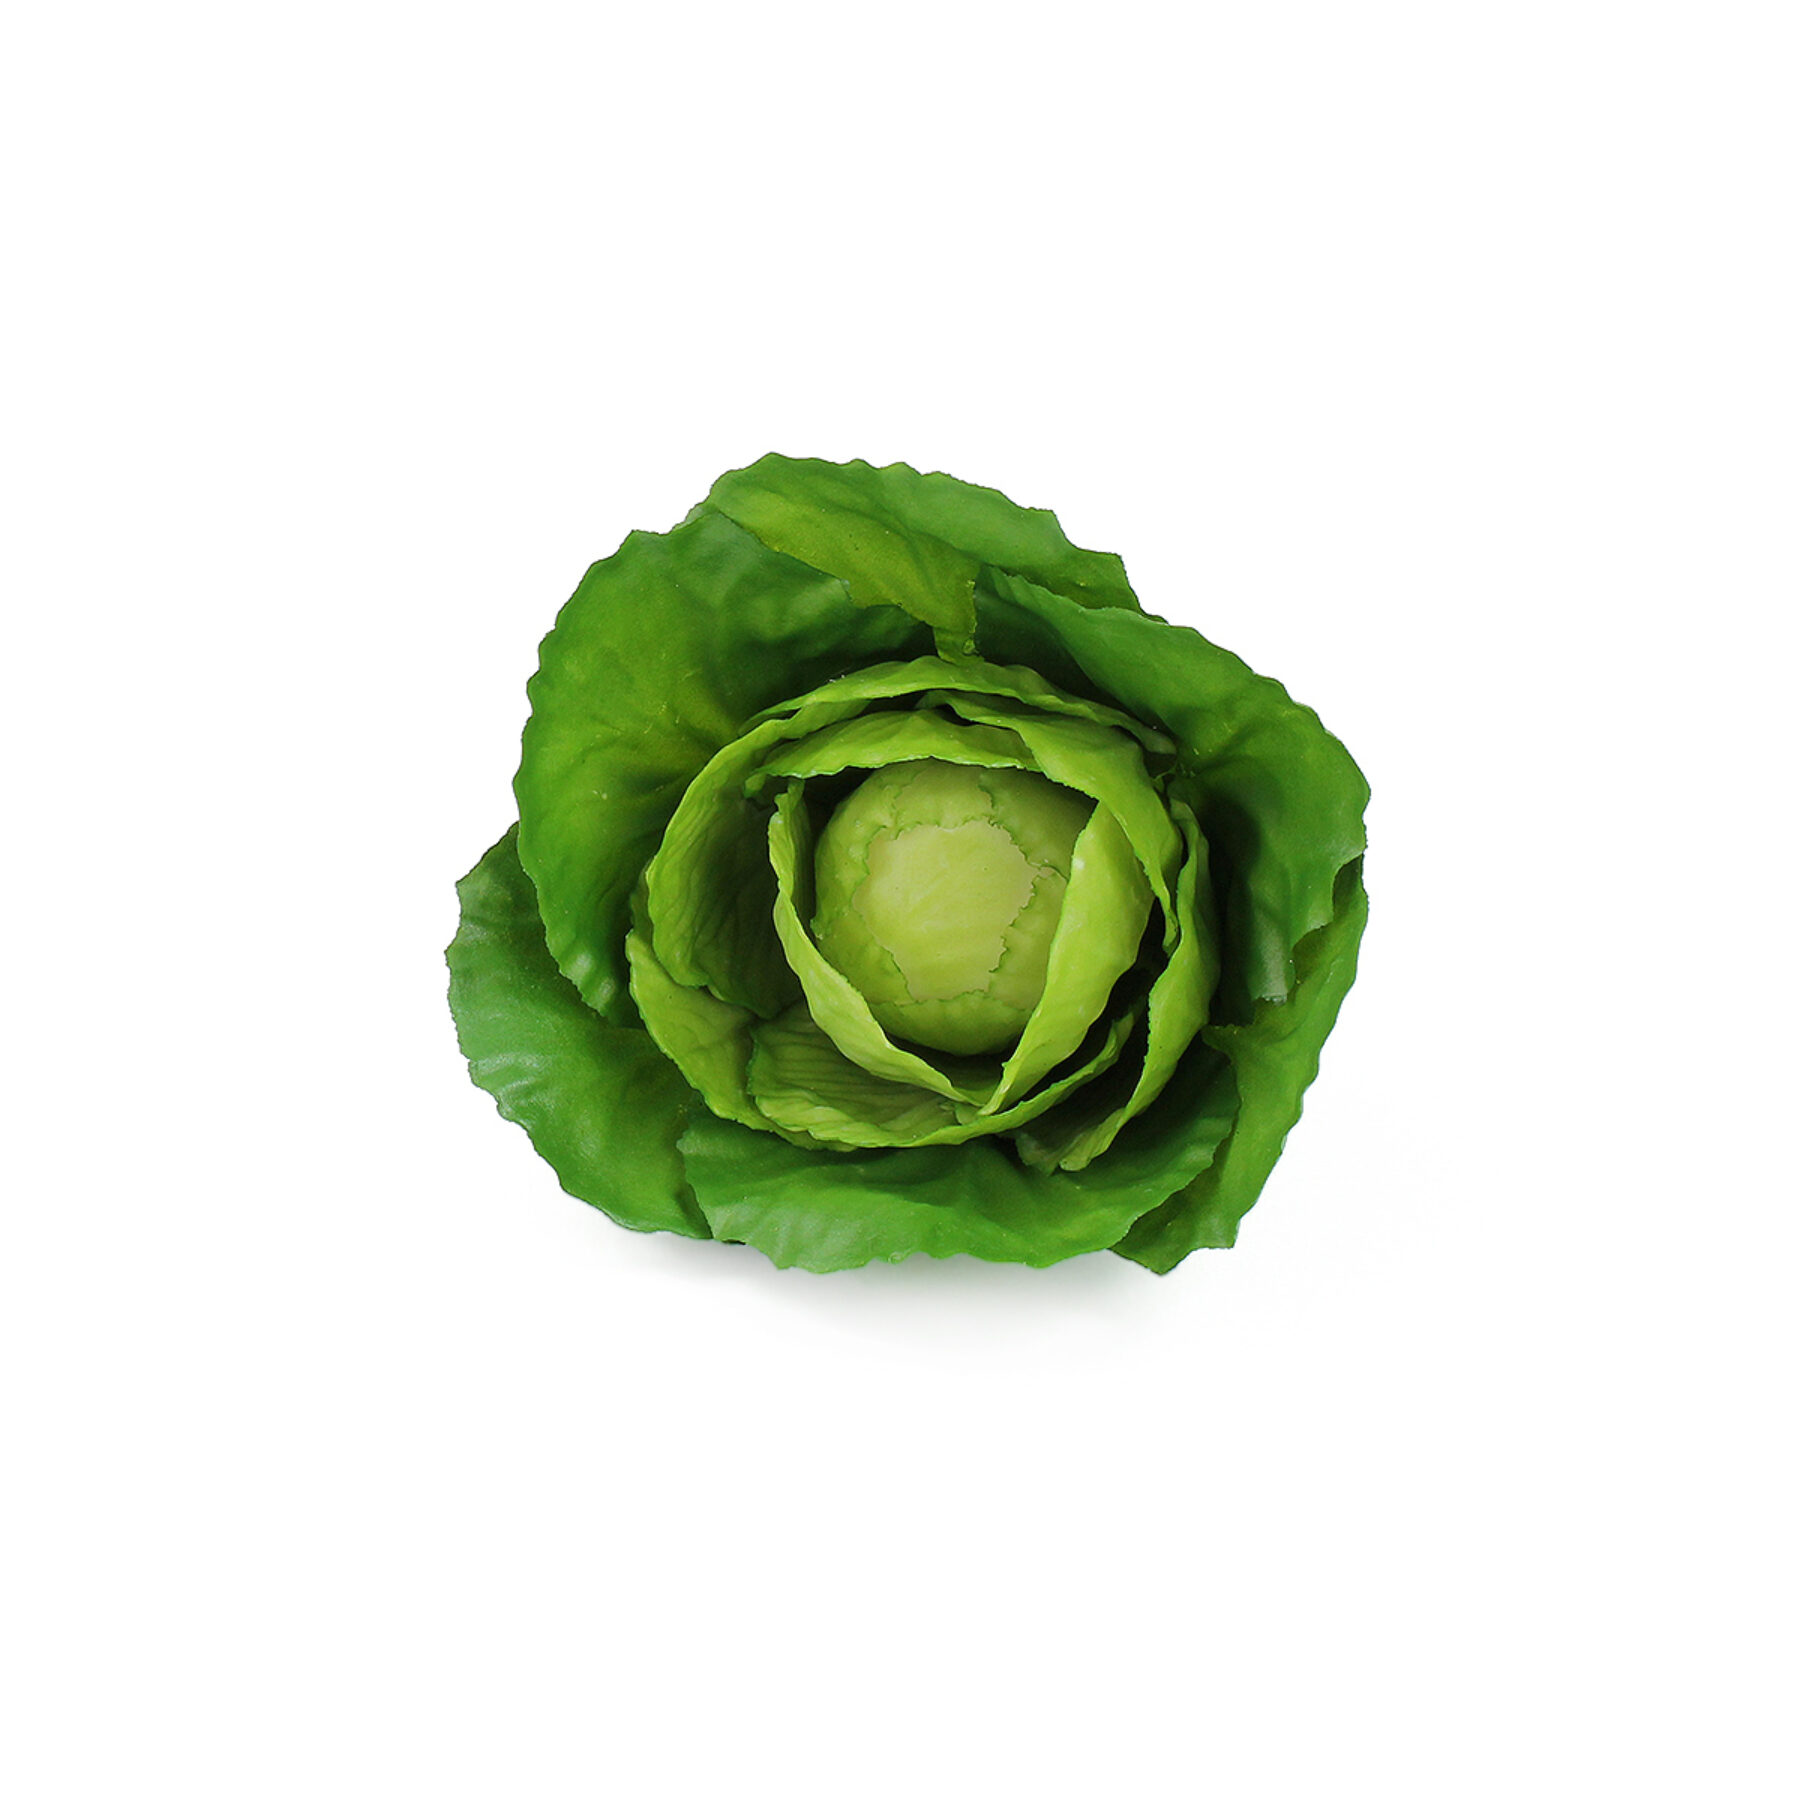 Artificial Food - Lettuce